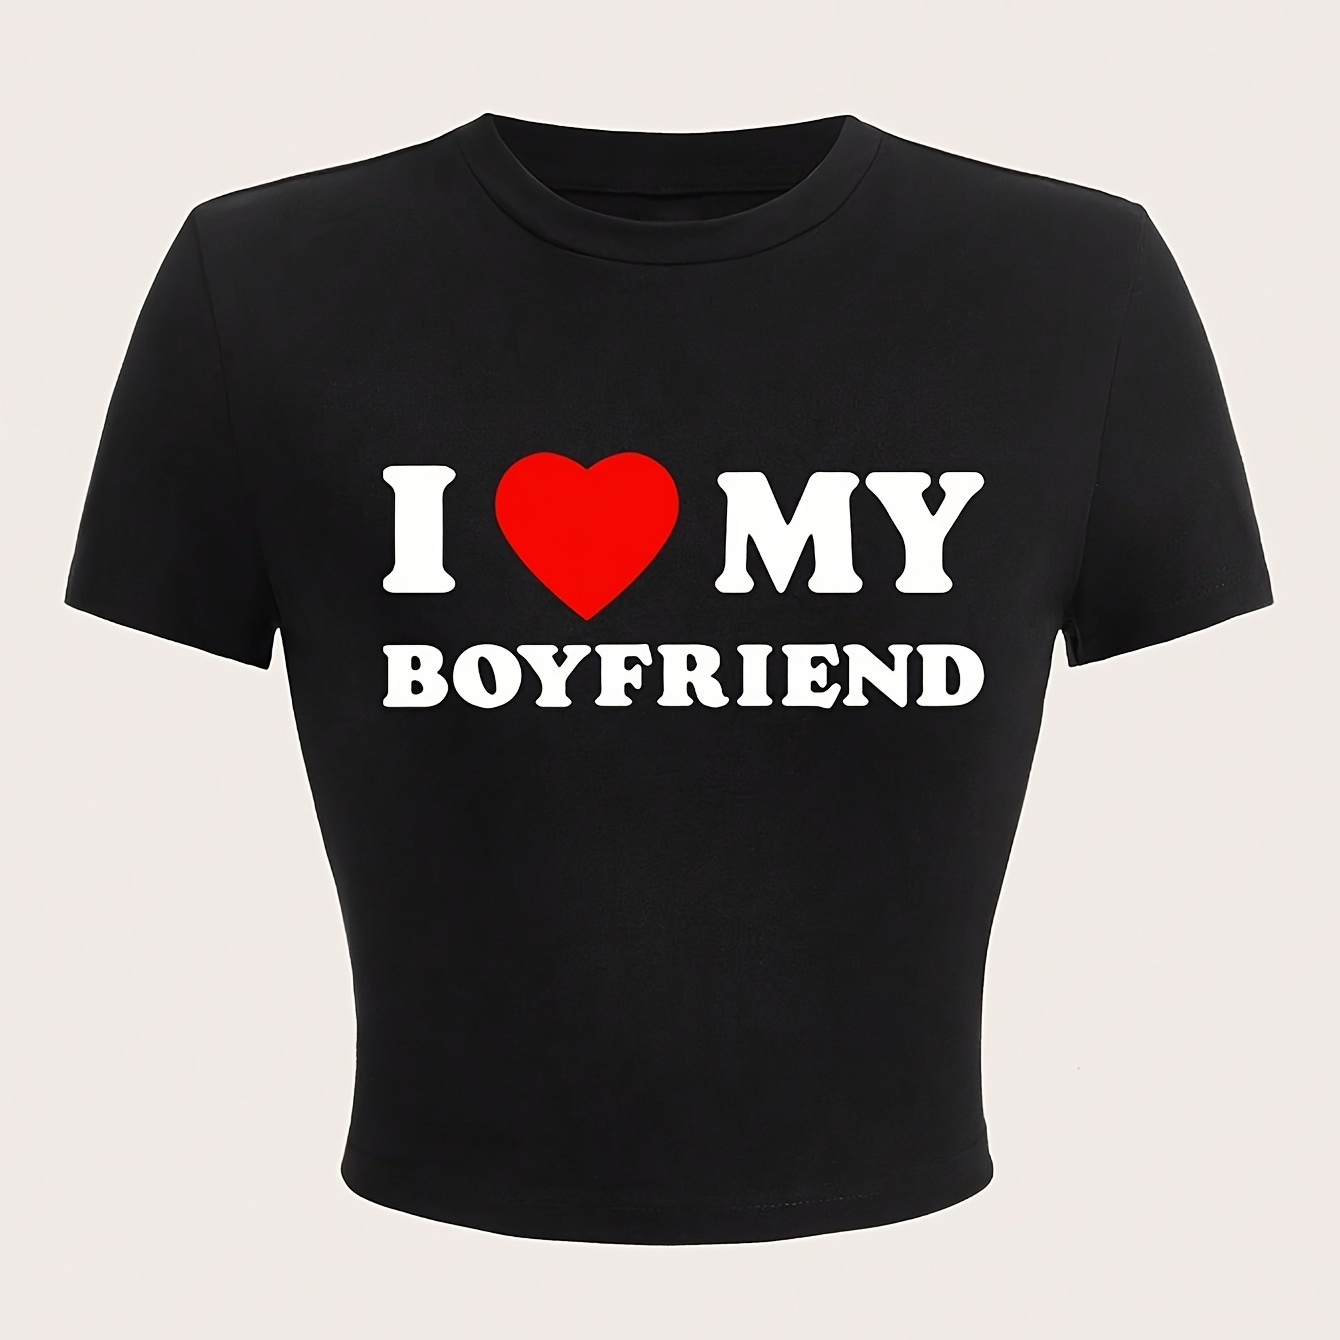 

I Love My Boyfriend Print T-shirt, Casual Crew Neck Short Sleeve Crop Top For Summer, Women's Clothing